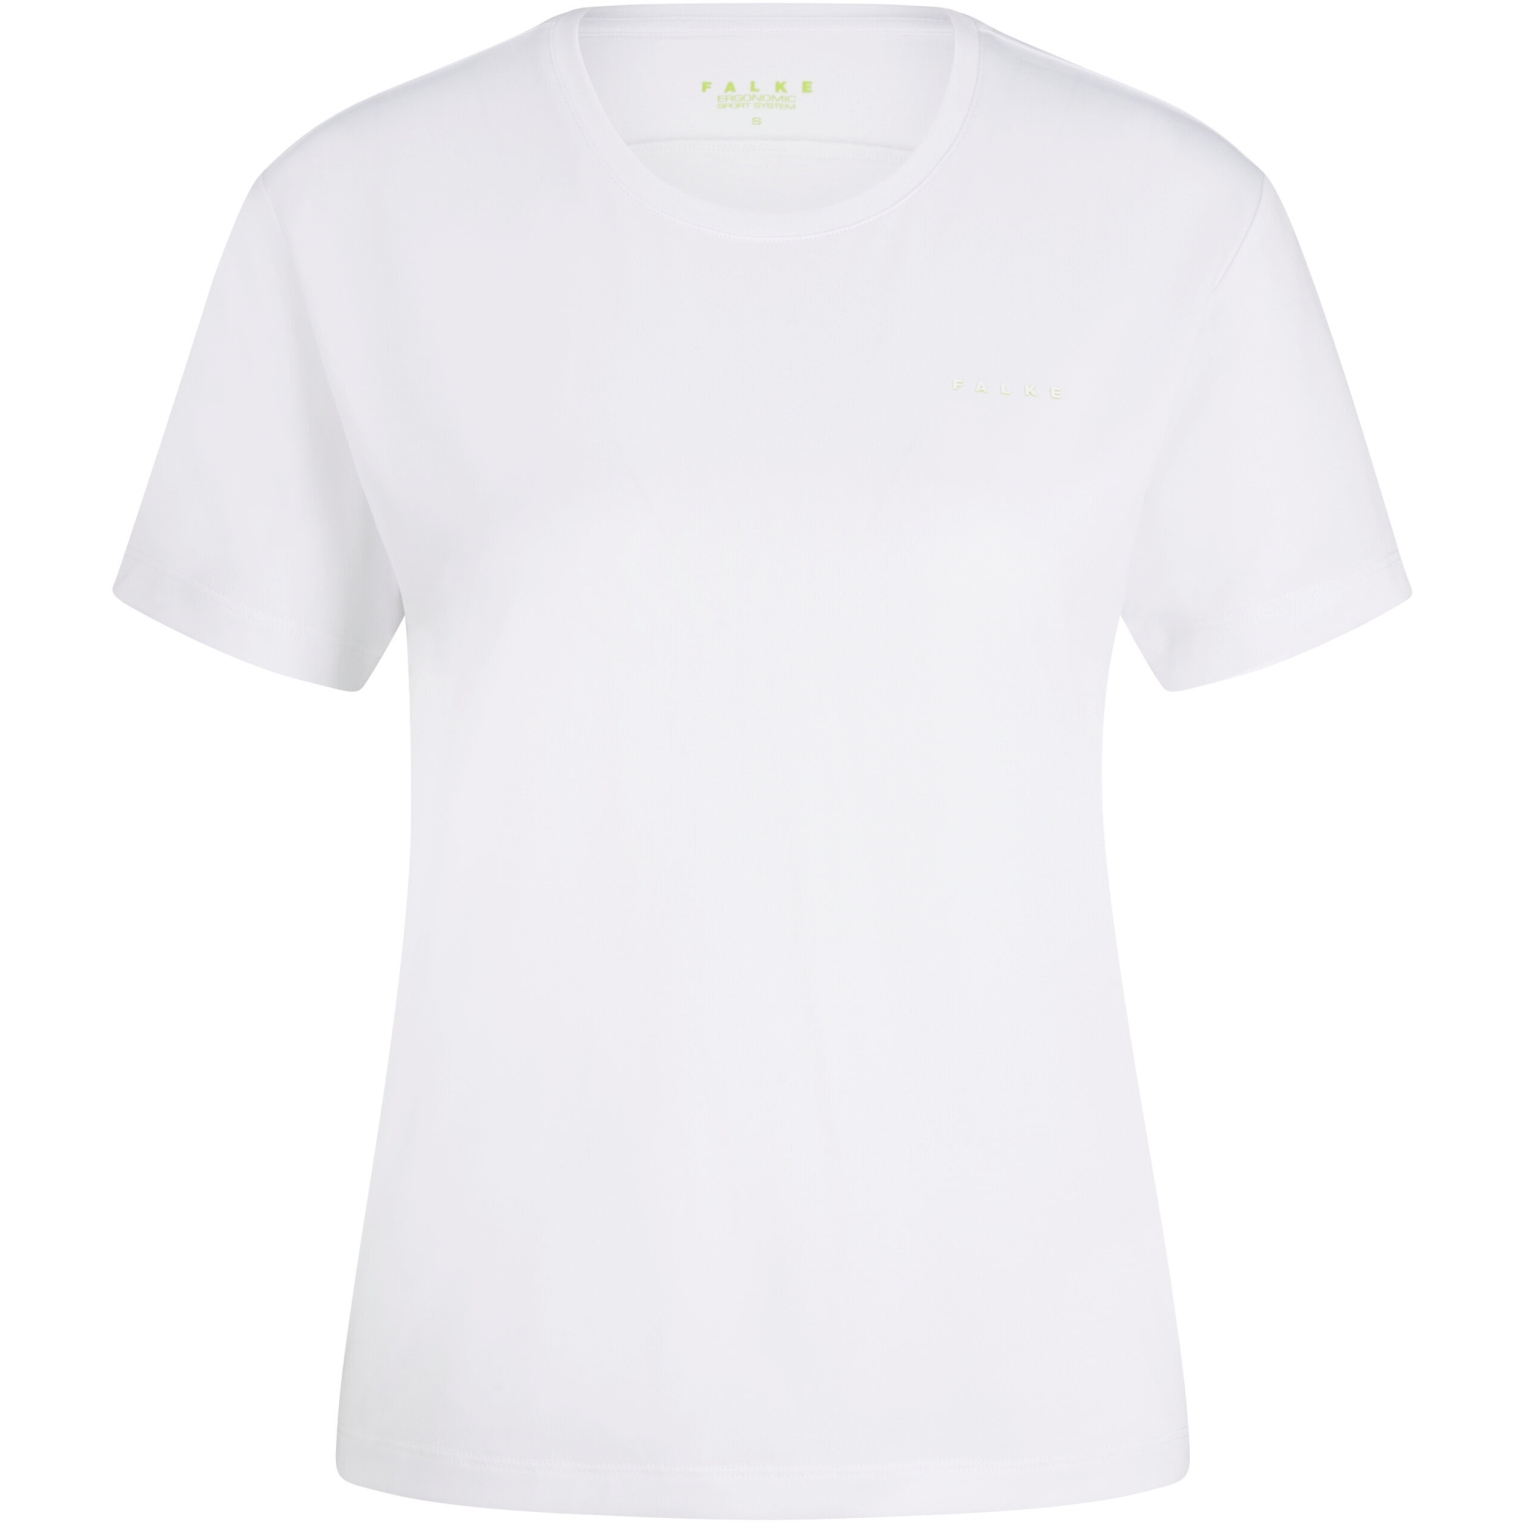 Picture of Falke TK1 T-Shirt Women - white 2860